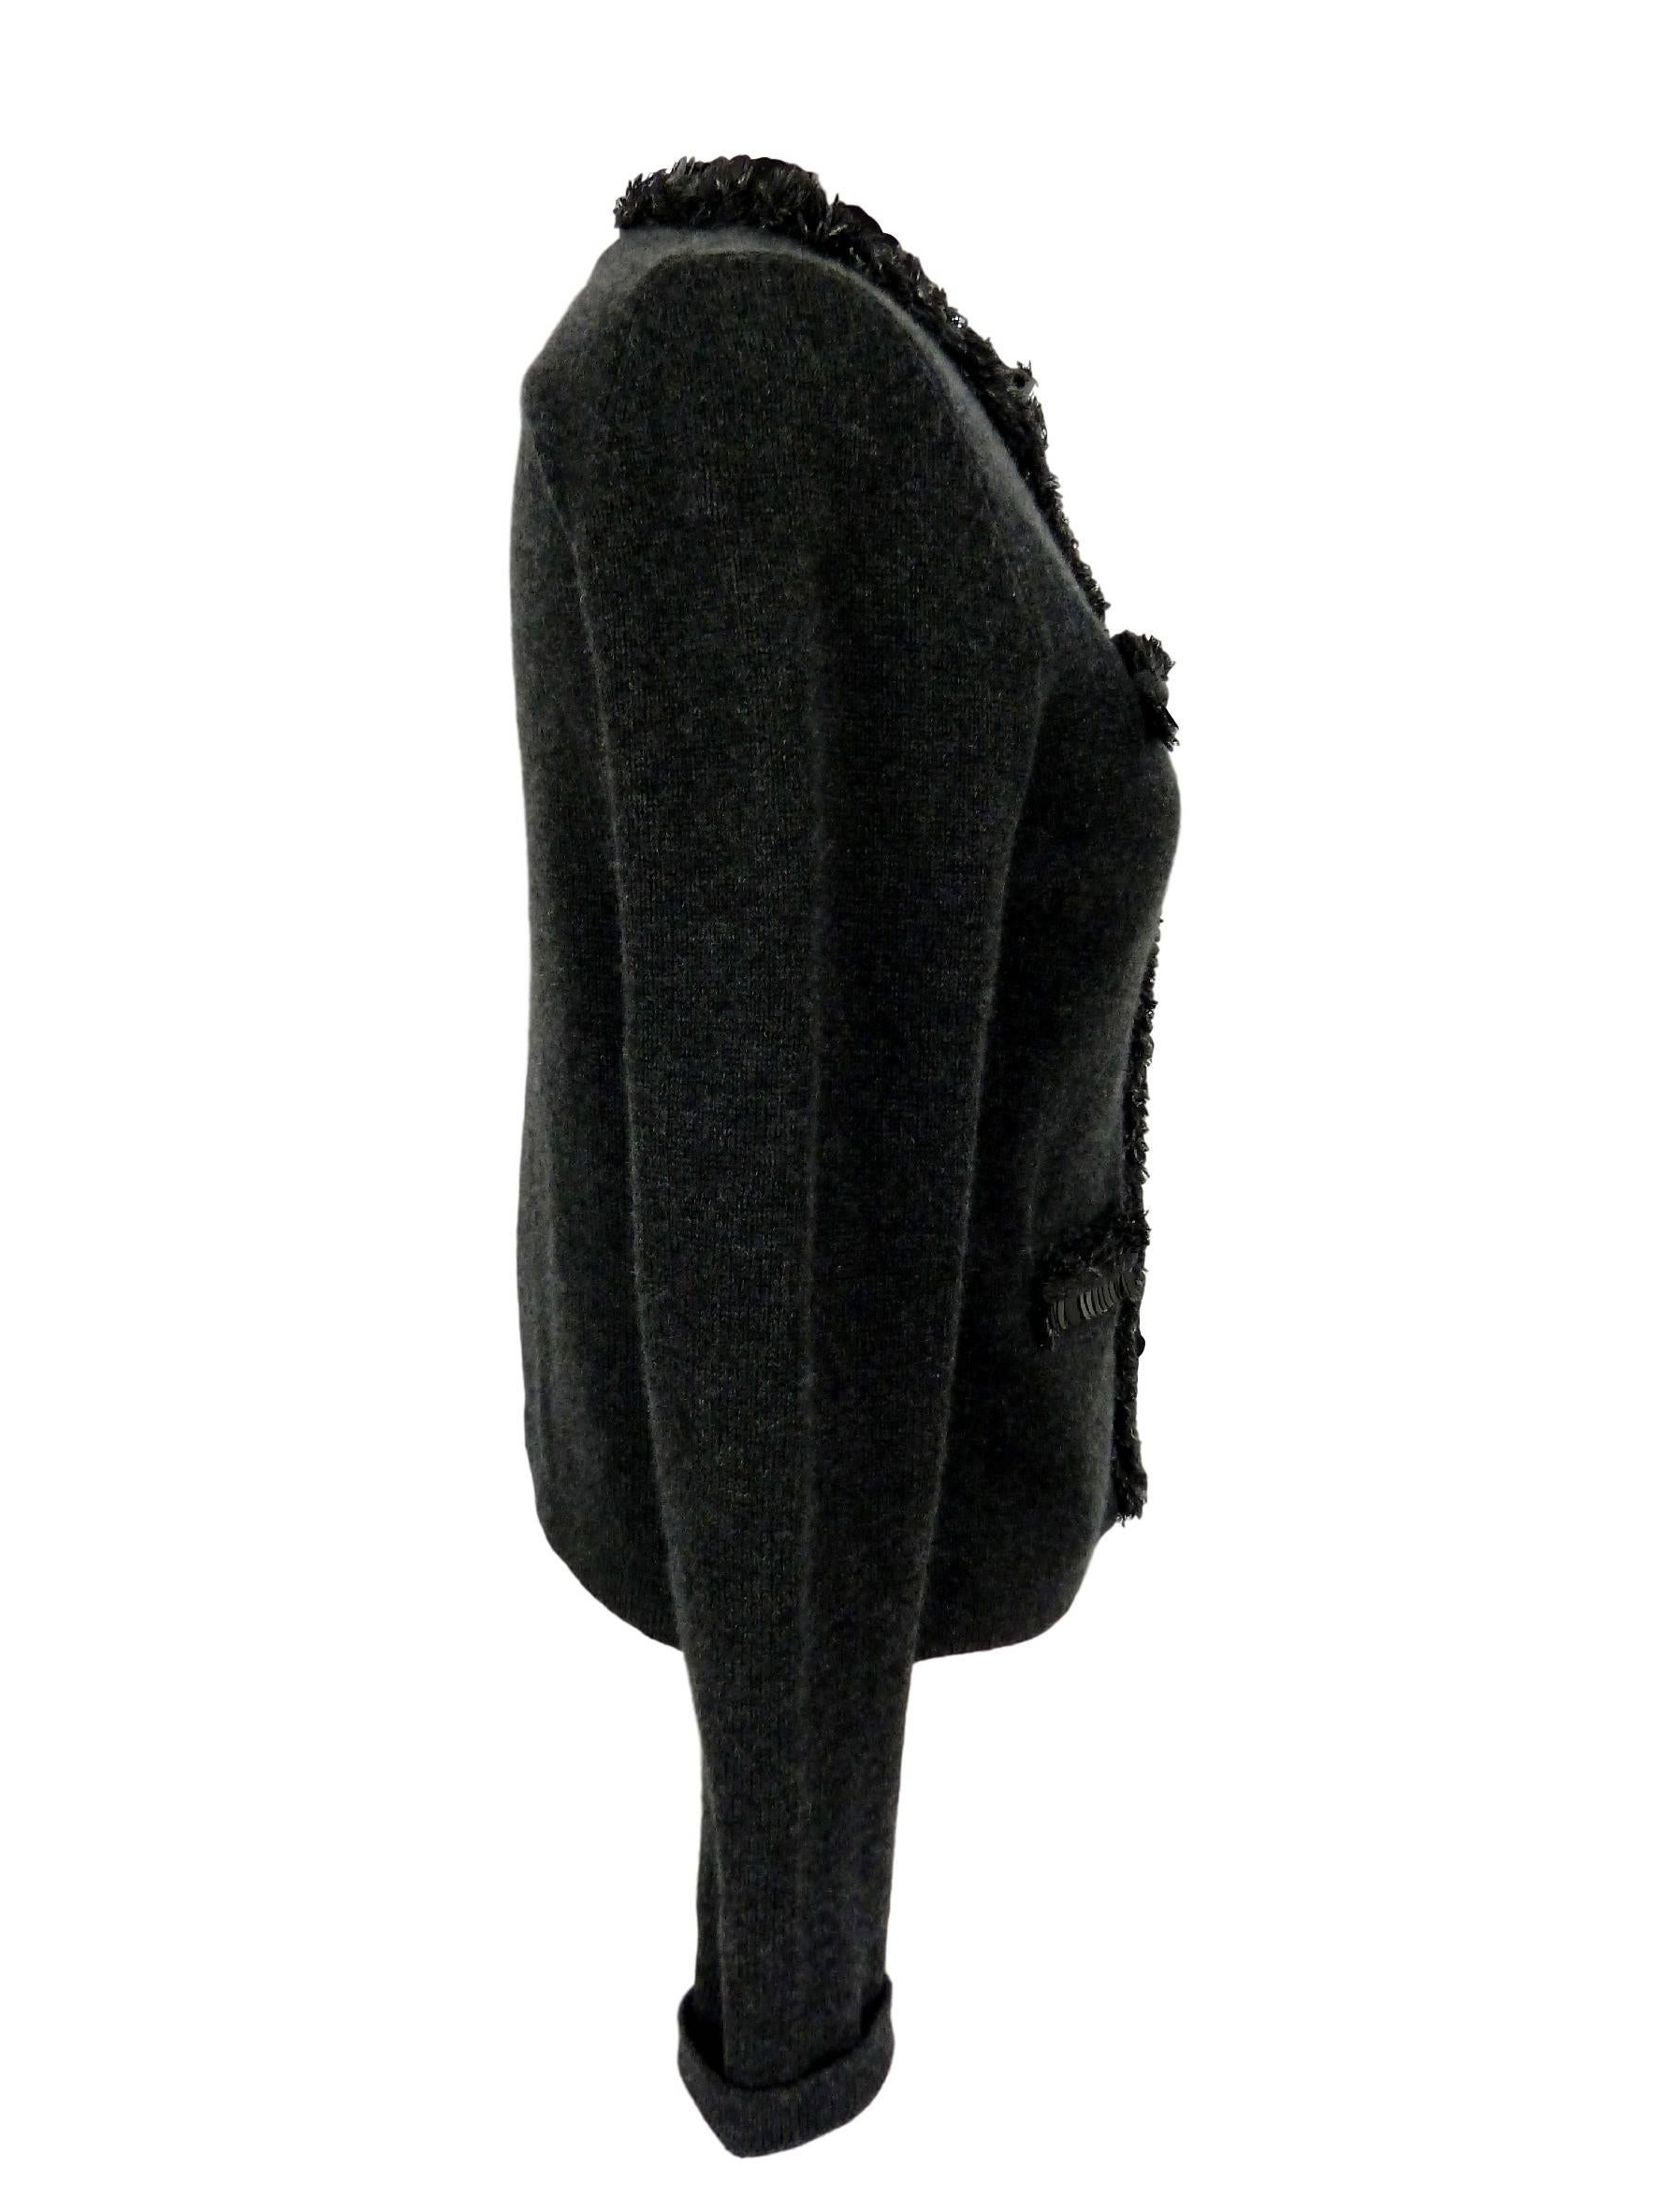 Gray Rena Lange 1980s jacket cashmere women's gray sequins size M boucle blazer For Sale